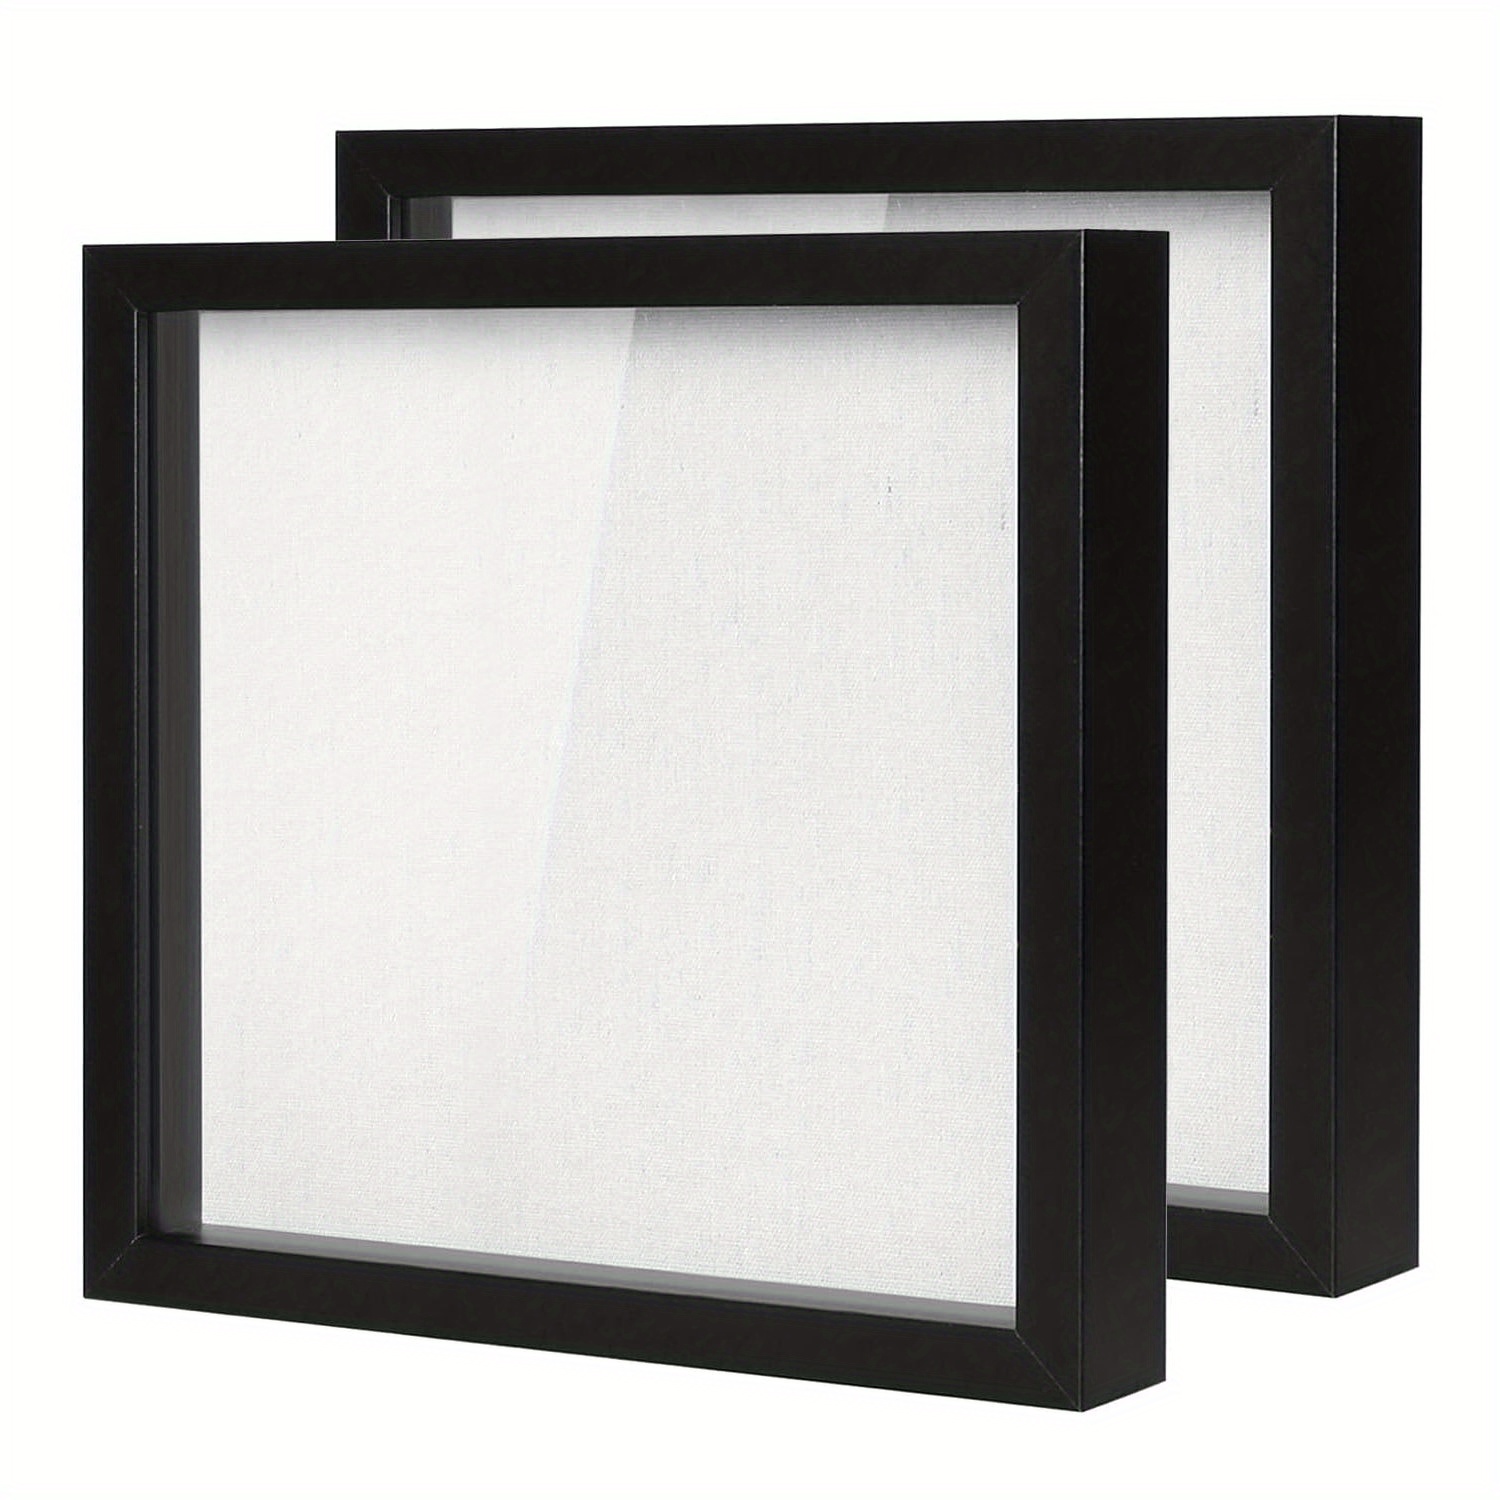 8x10.5 Shadow Box Frame Display Case 2 inch Depth Collages Mementos Awards  White